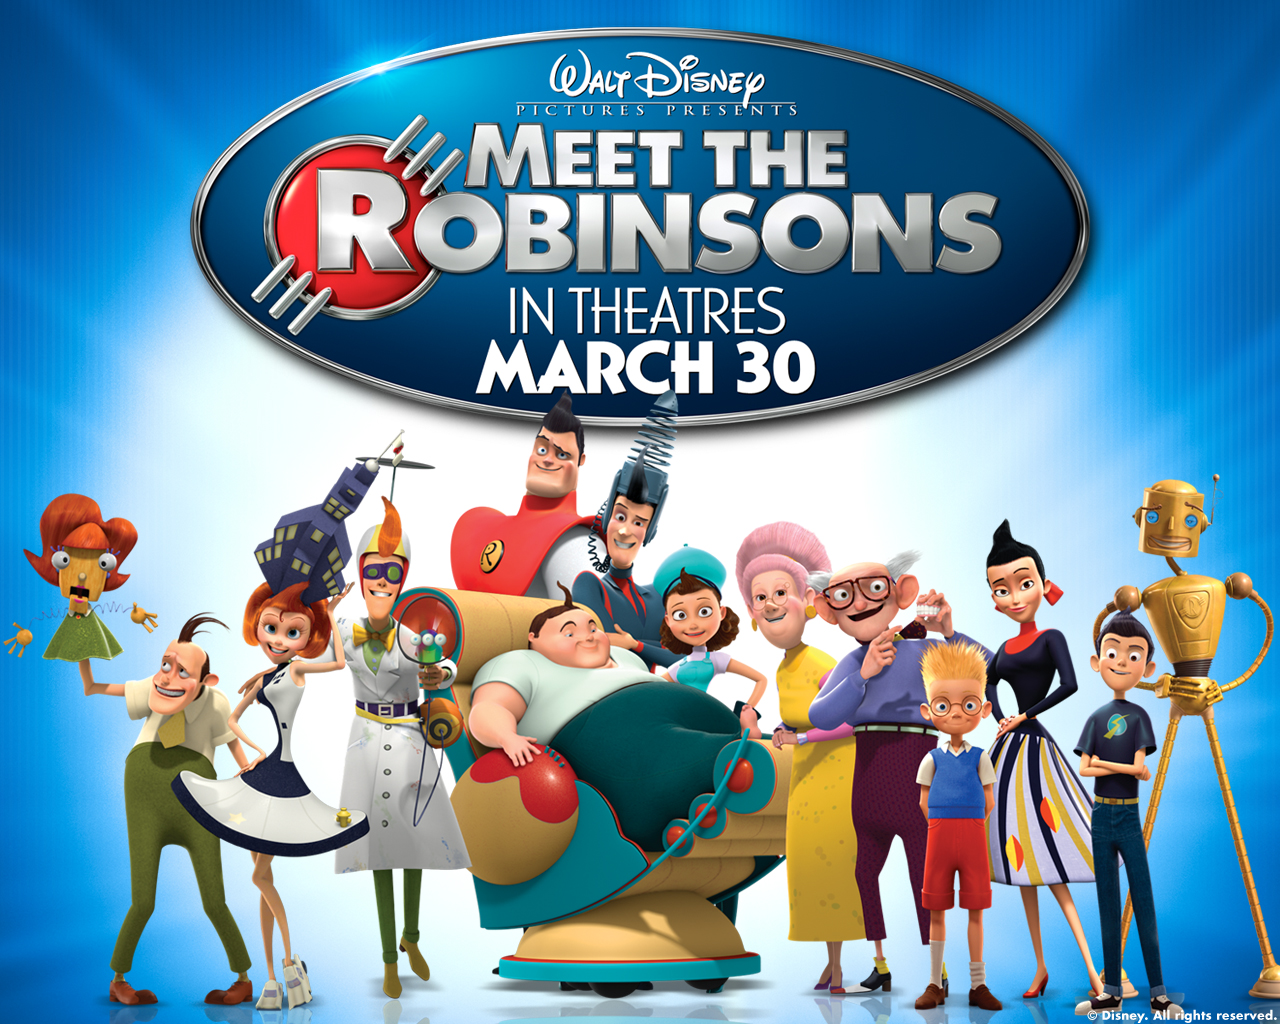 "Meet the Robinsons" desktop wallpaper (1280 x 1024 pixels)